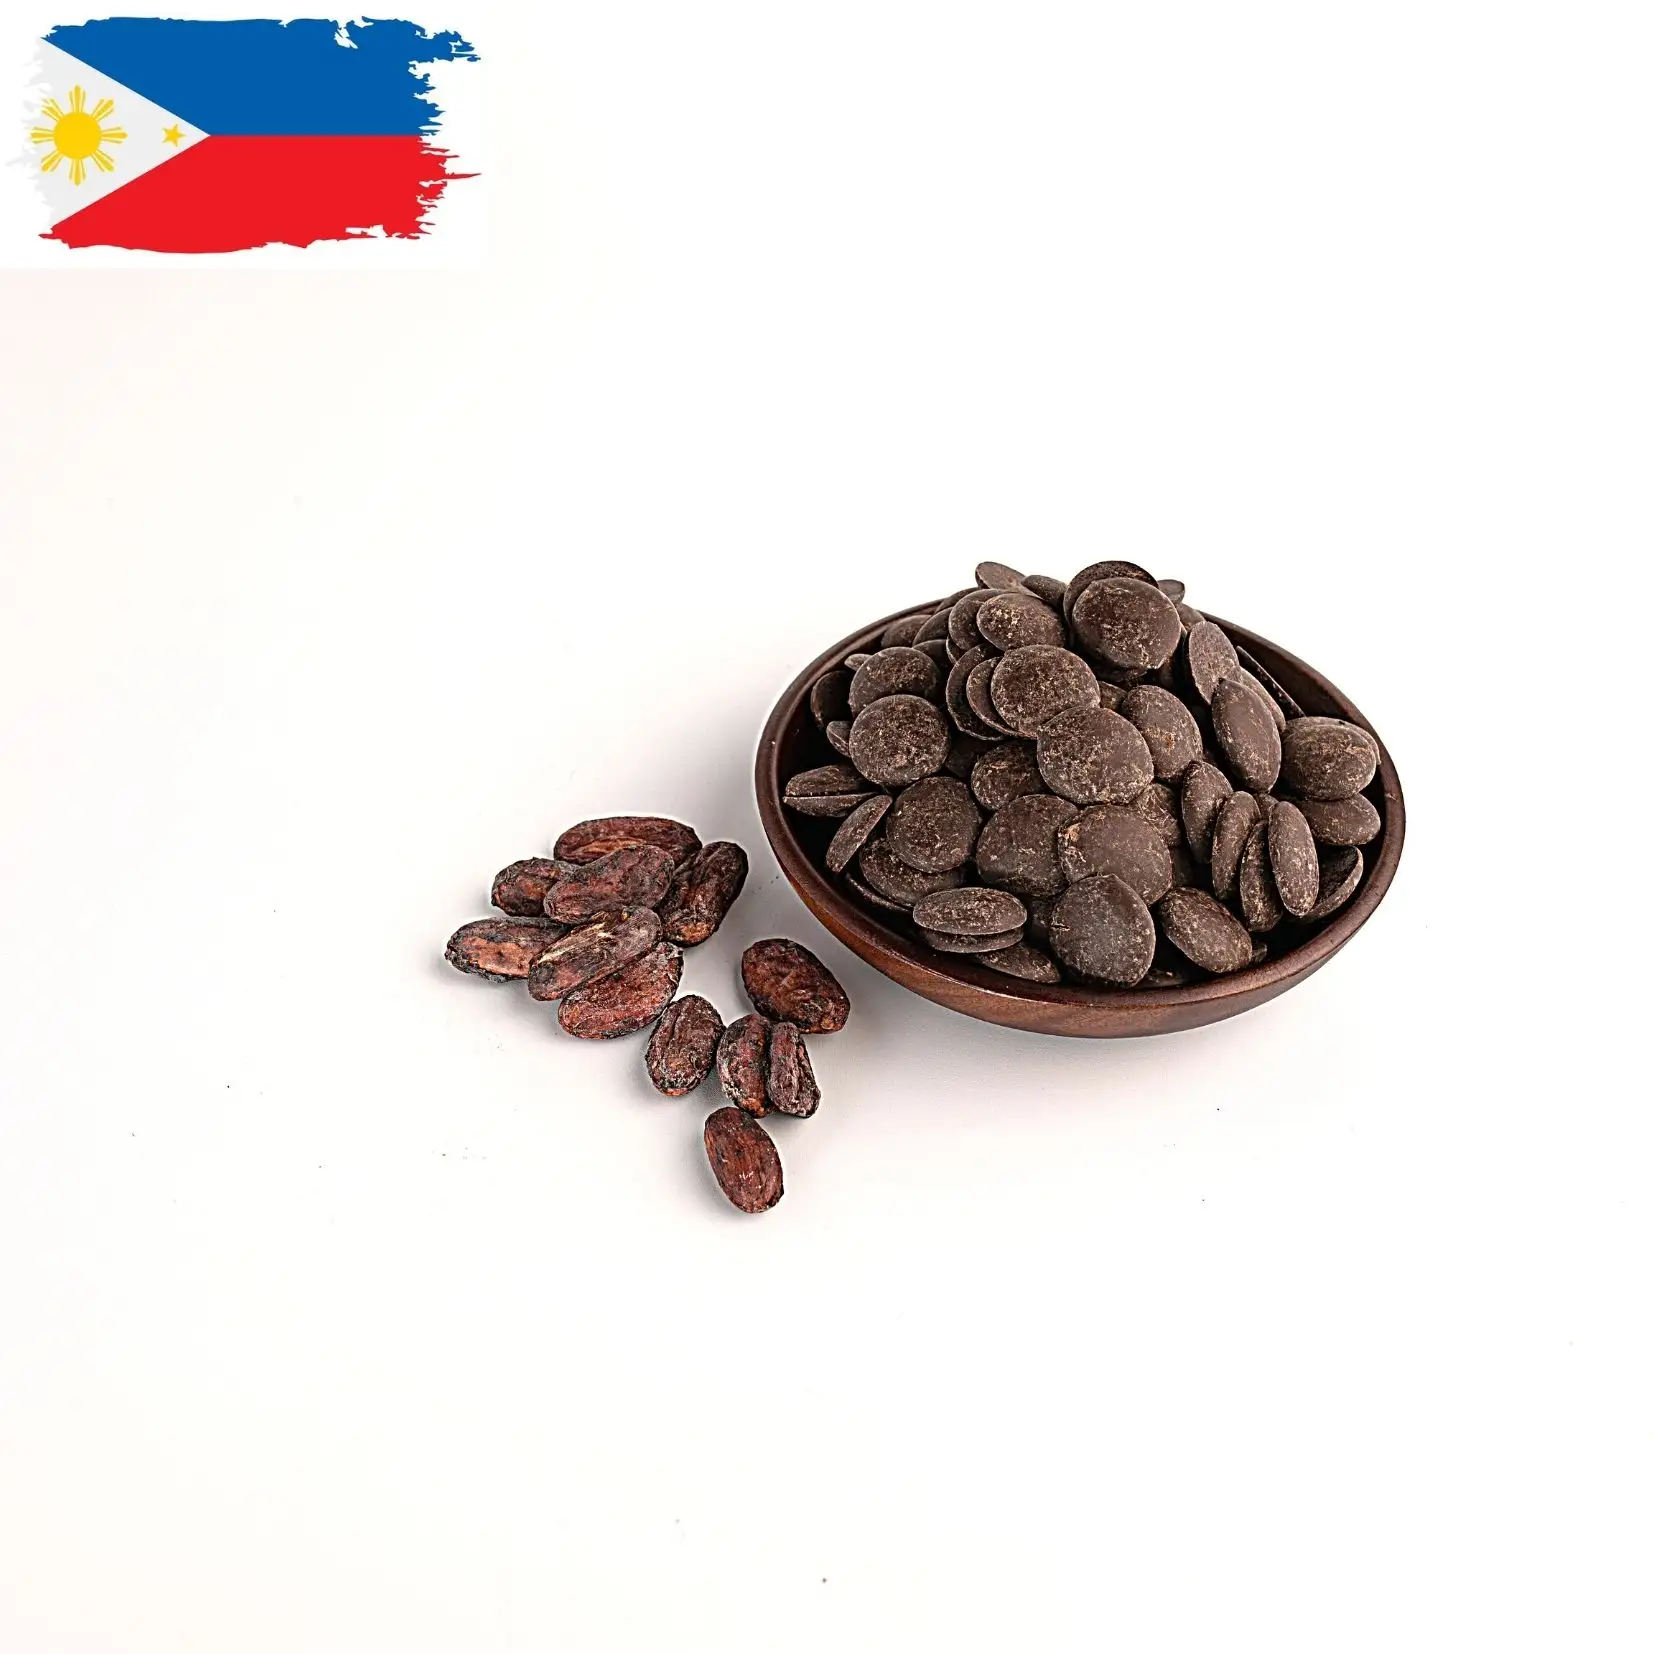 Филиппинская натуральная какао-масса/какао-ликер какао-следы